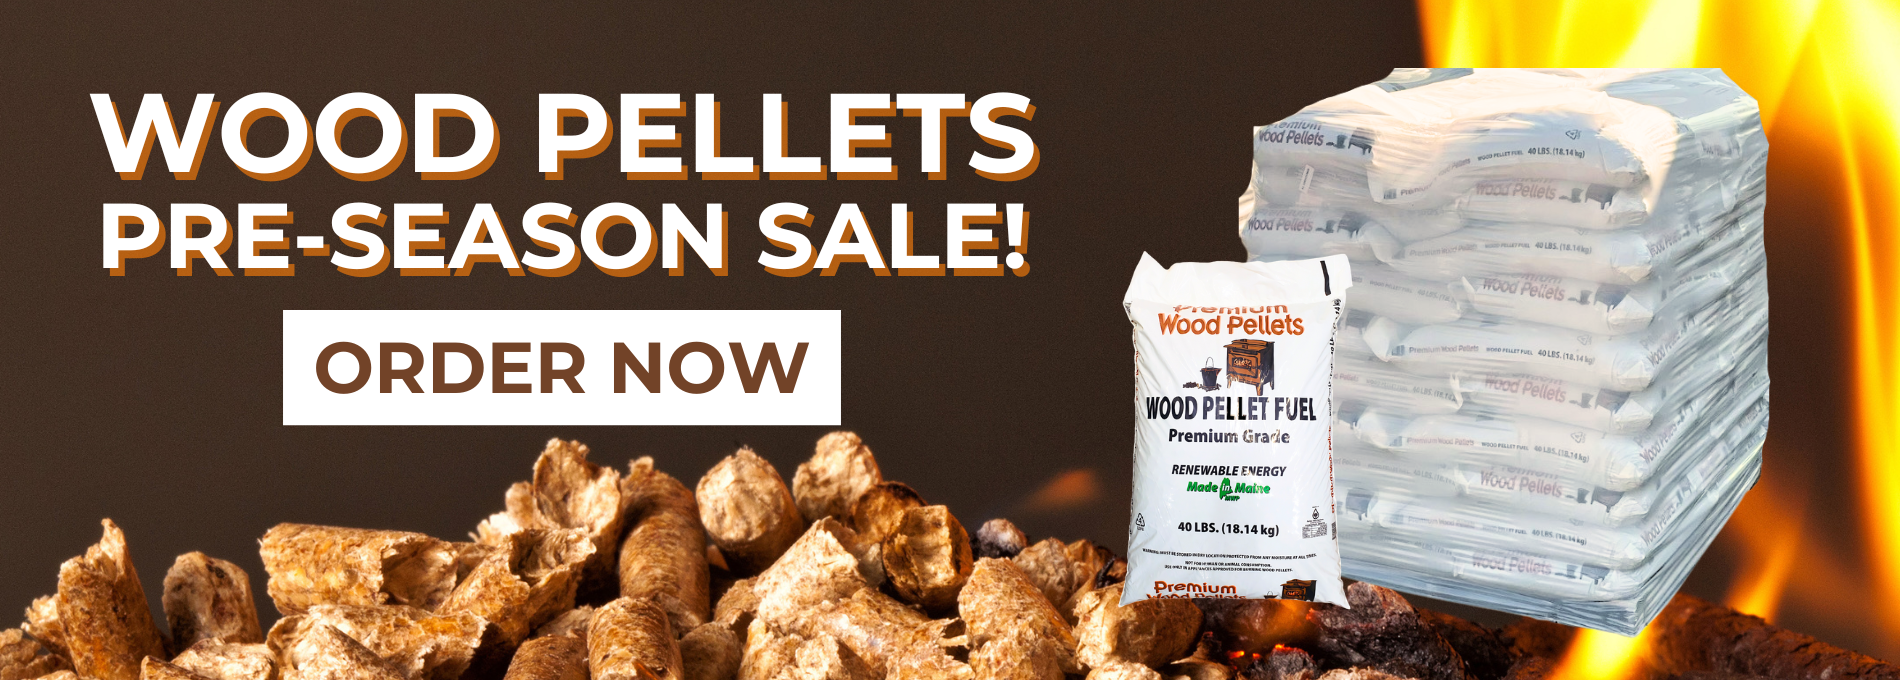 Wood Pellets Prea-Season Sale